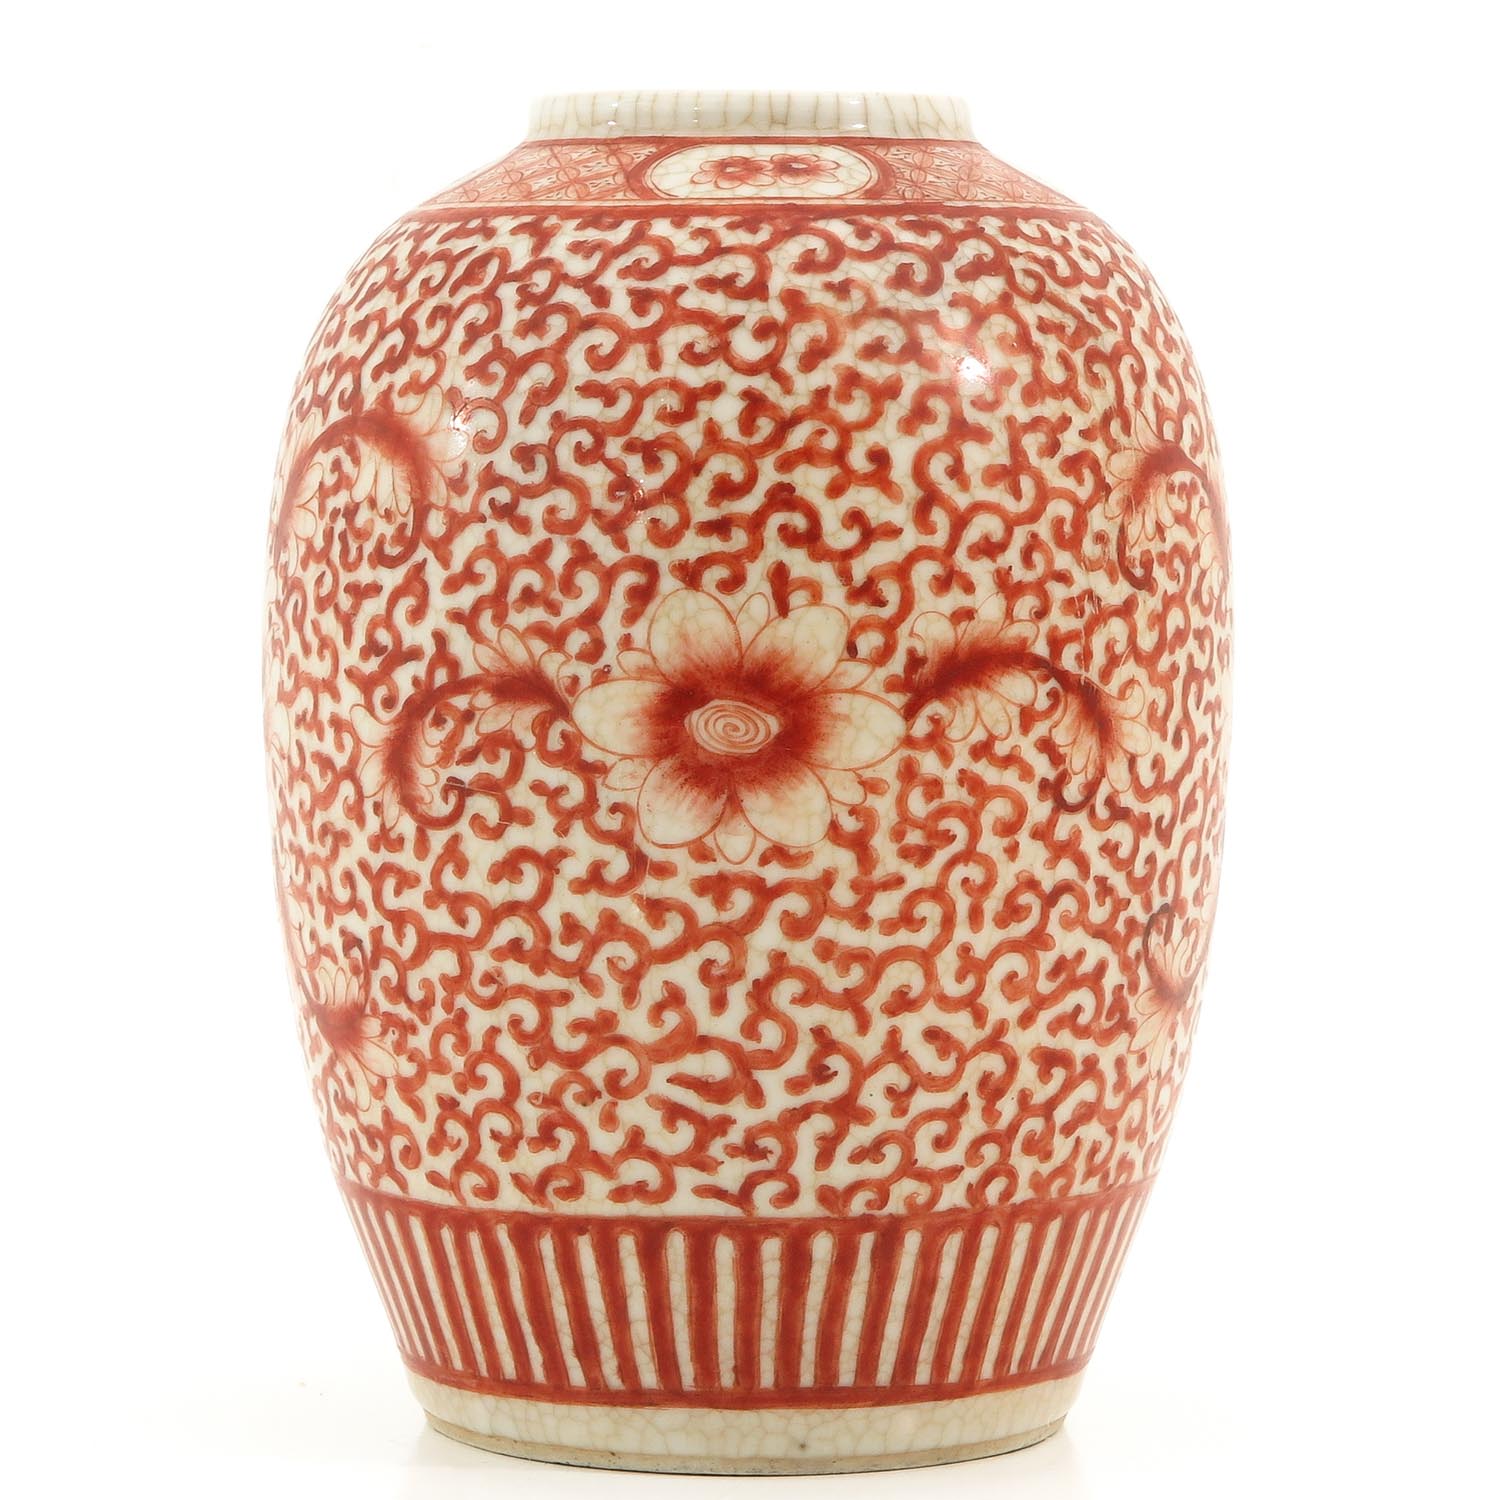 A Red Floral Decor Vase - Image 2 of 9